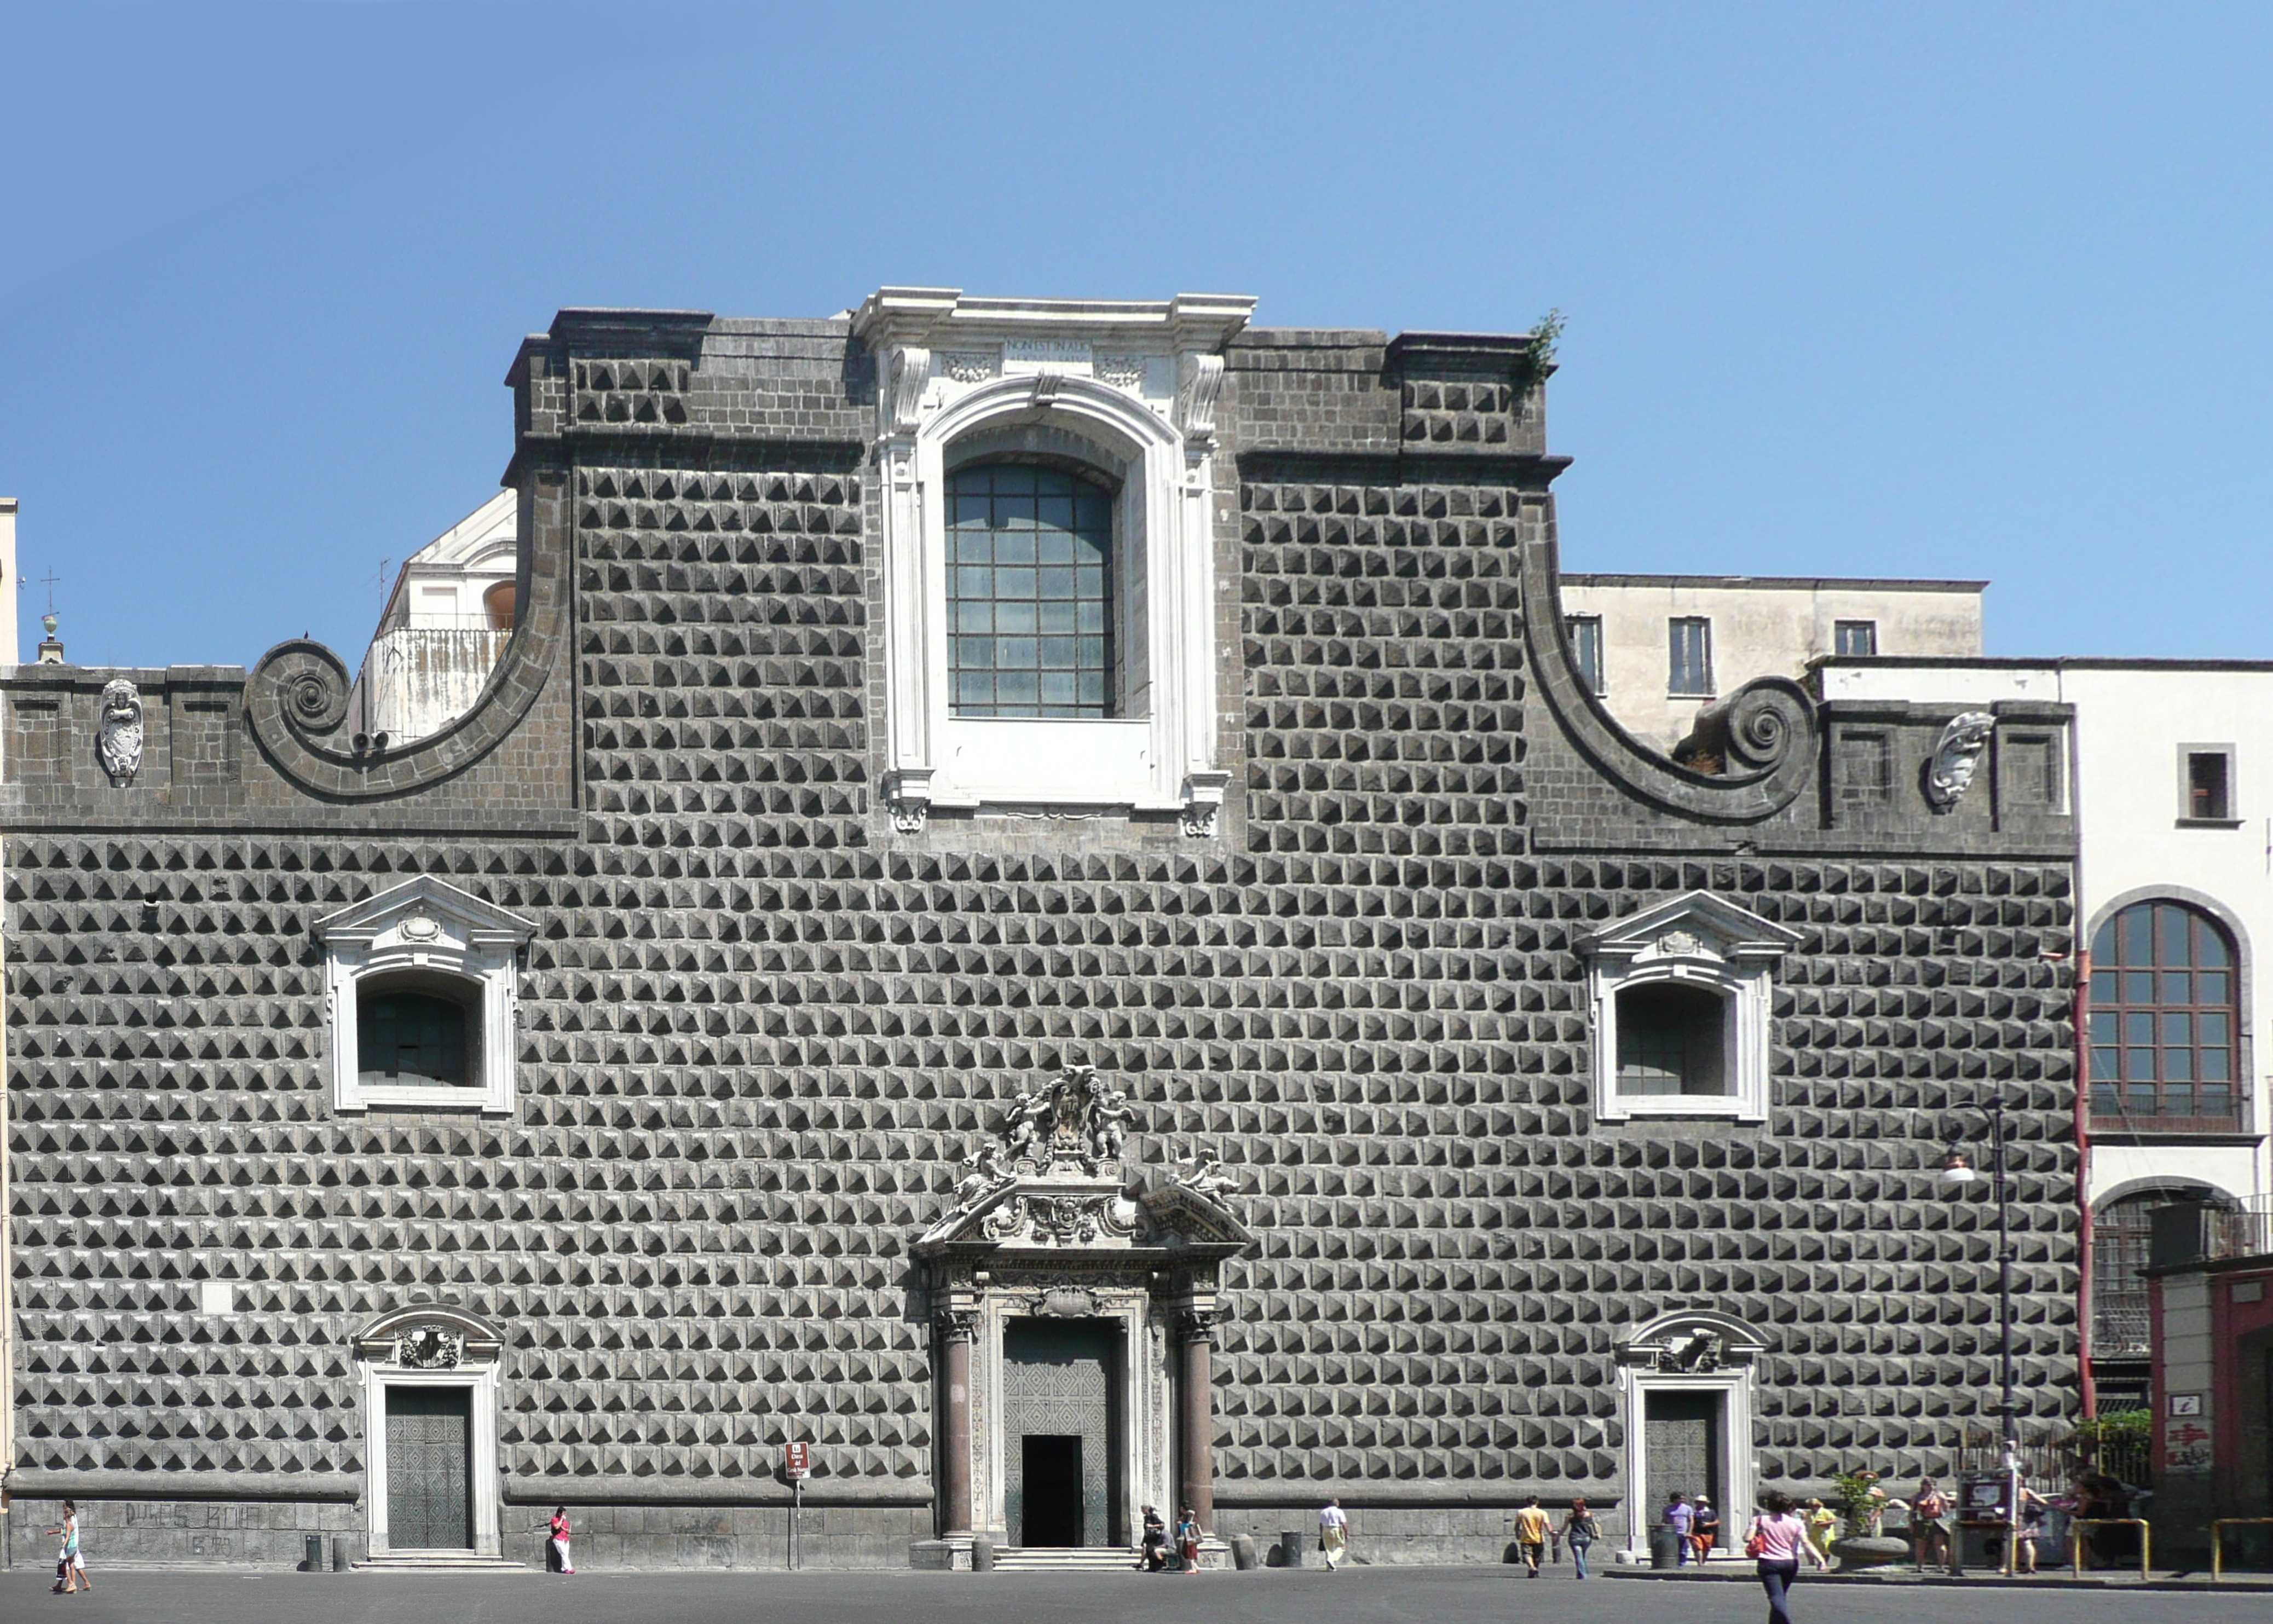 Chiesa_del_Gesù_Nuovo_Napoli.jpg/Wikimedia CC BY-SA 2.0 https://creativecommons.org/licenses/by-sa/2.0/deed.en